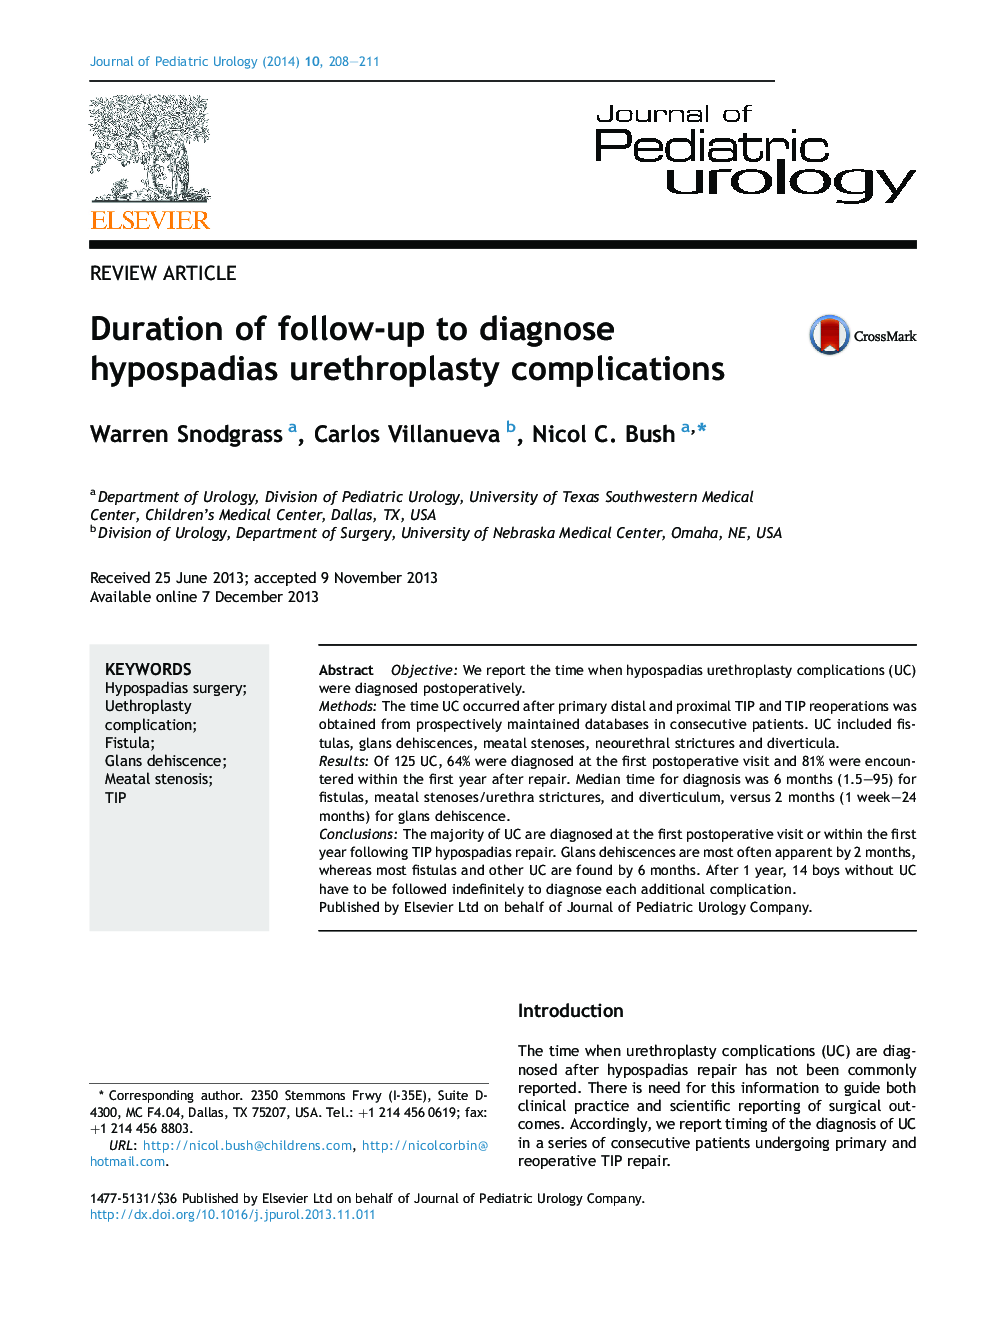 Duration of follow-up to diagnose hypospadias urethroplasty complications